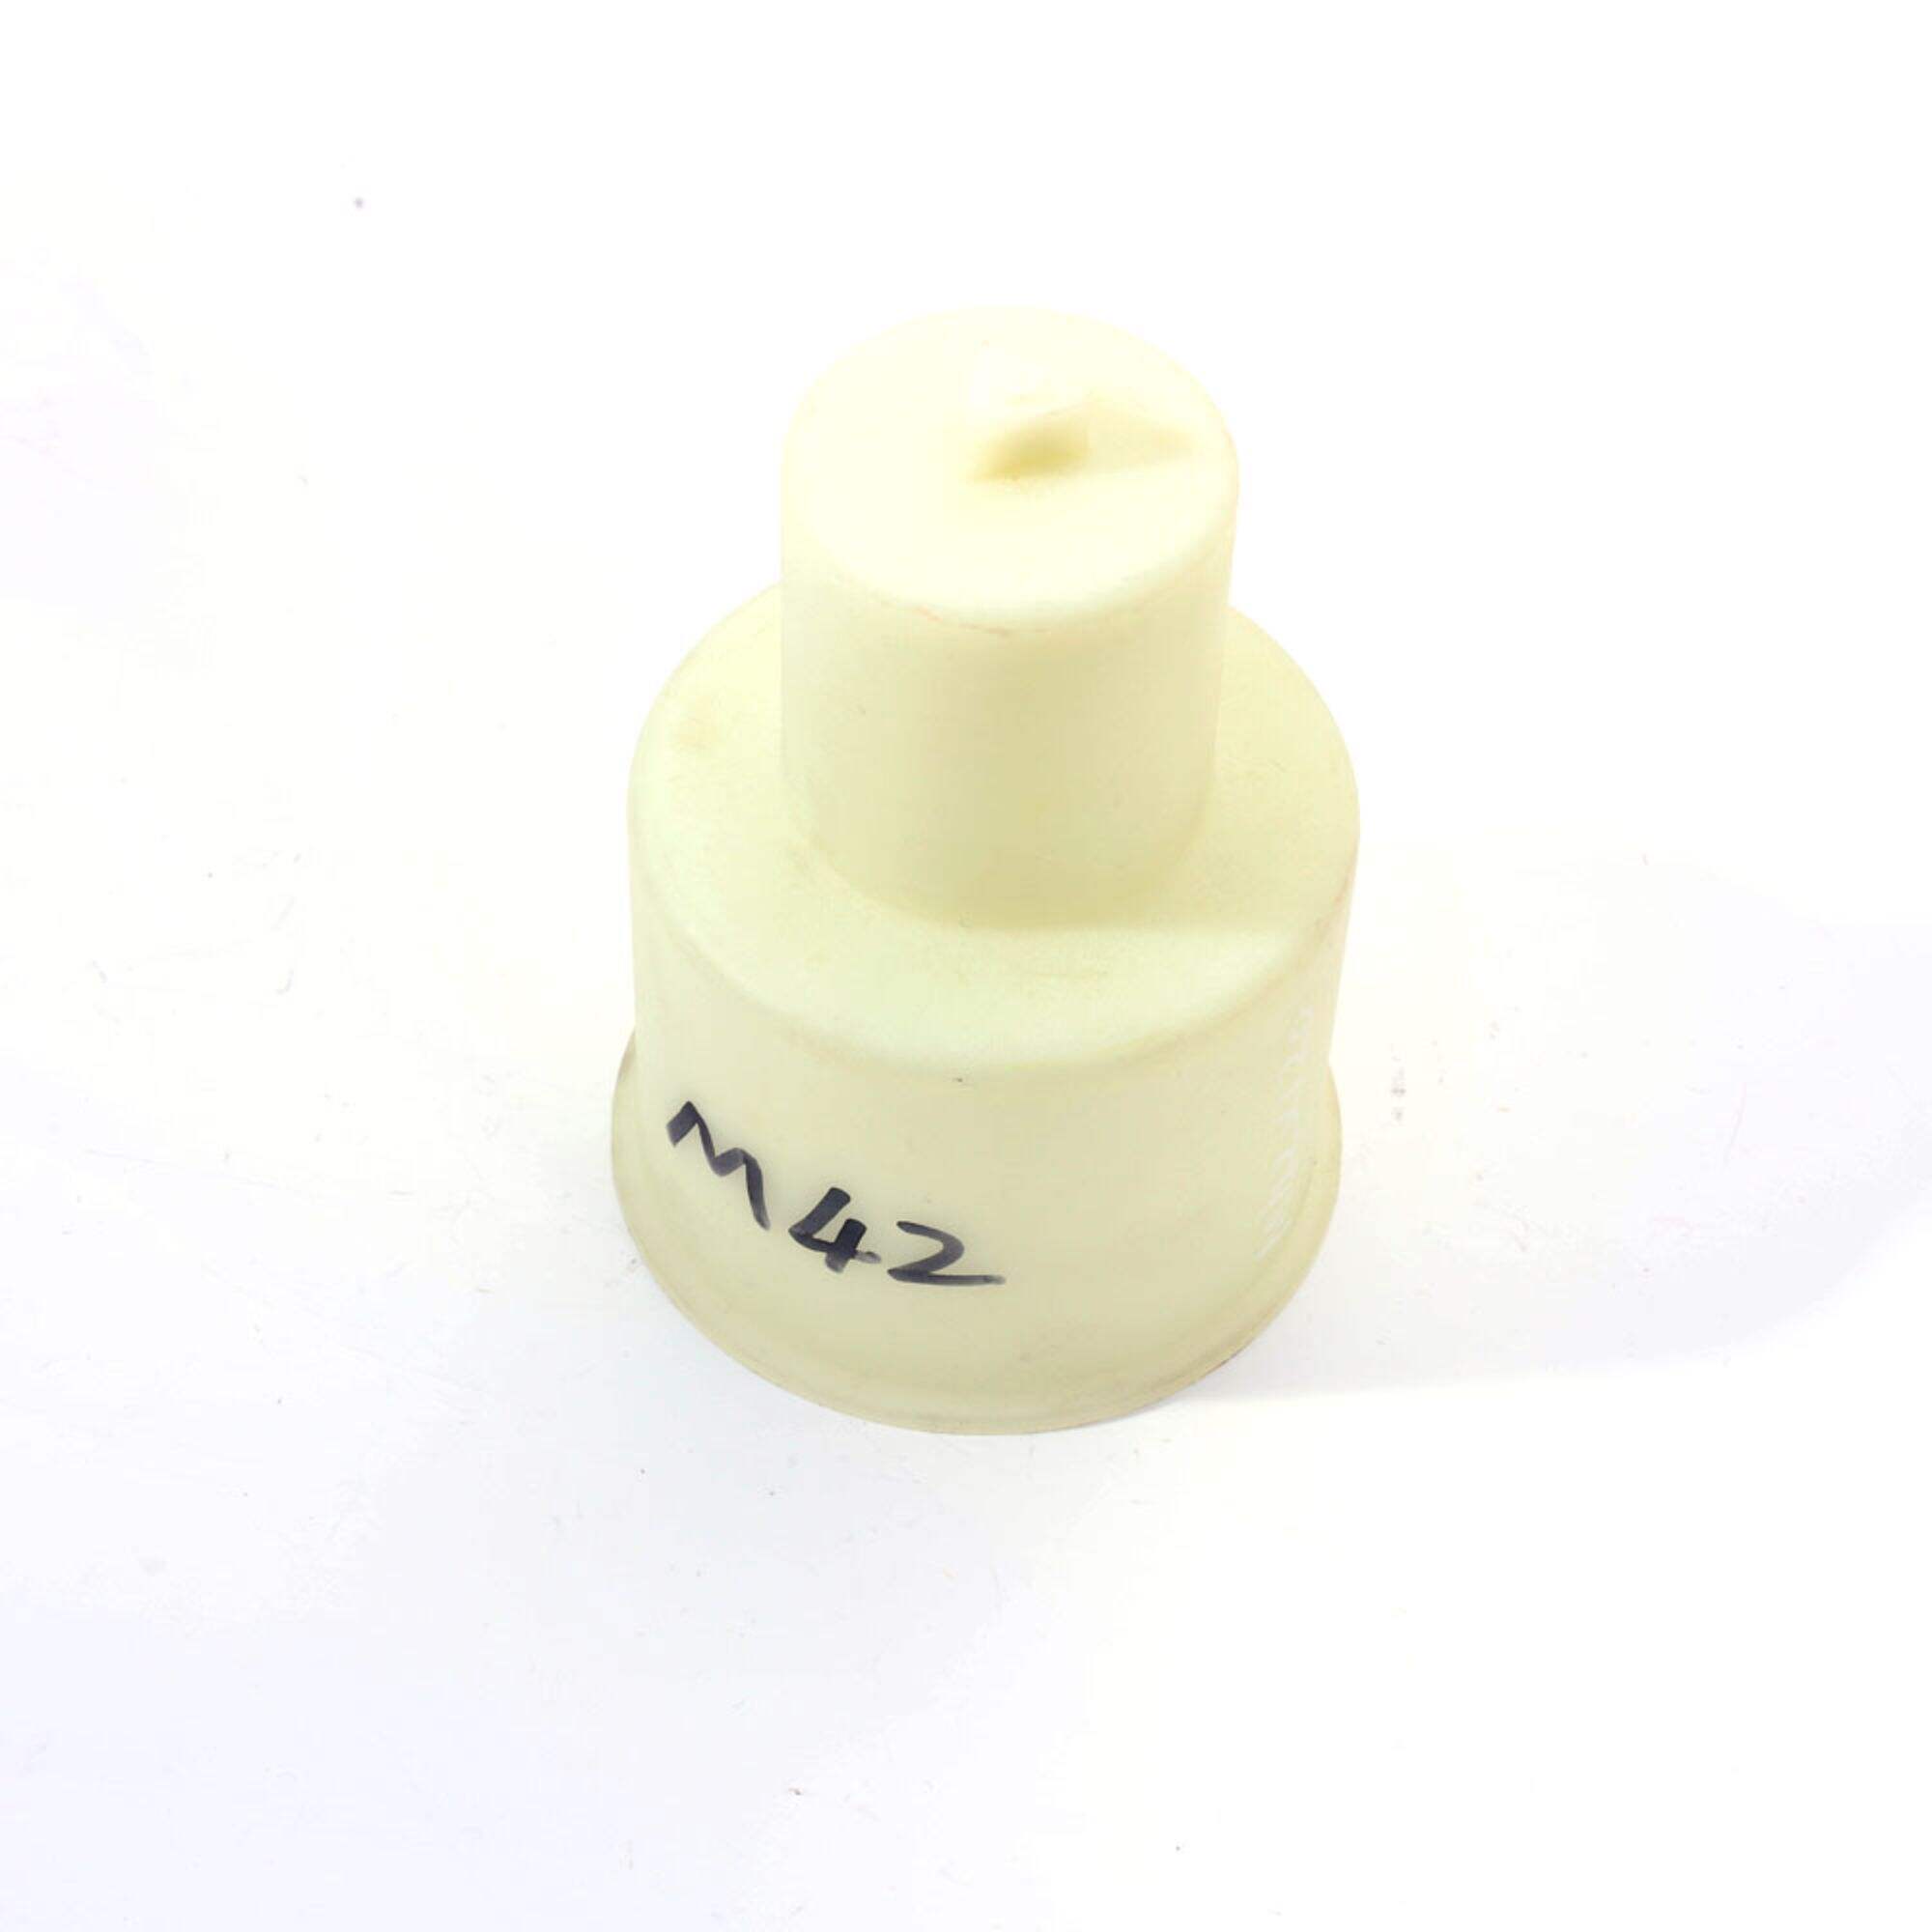 PE Hexagonal Nut Shield Nylon Nut Protection Cover Waterproof Wide Flange Plug Caps